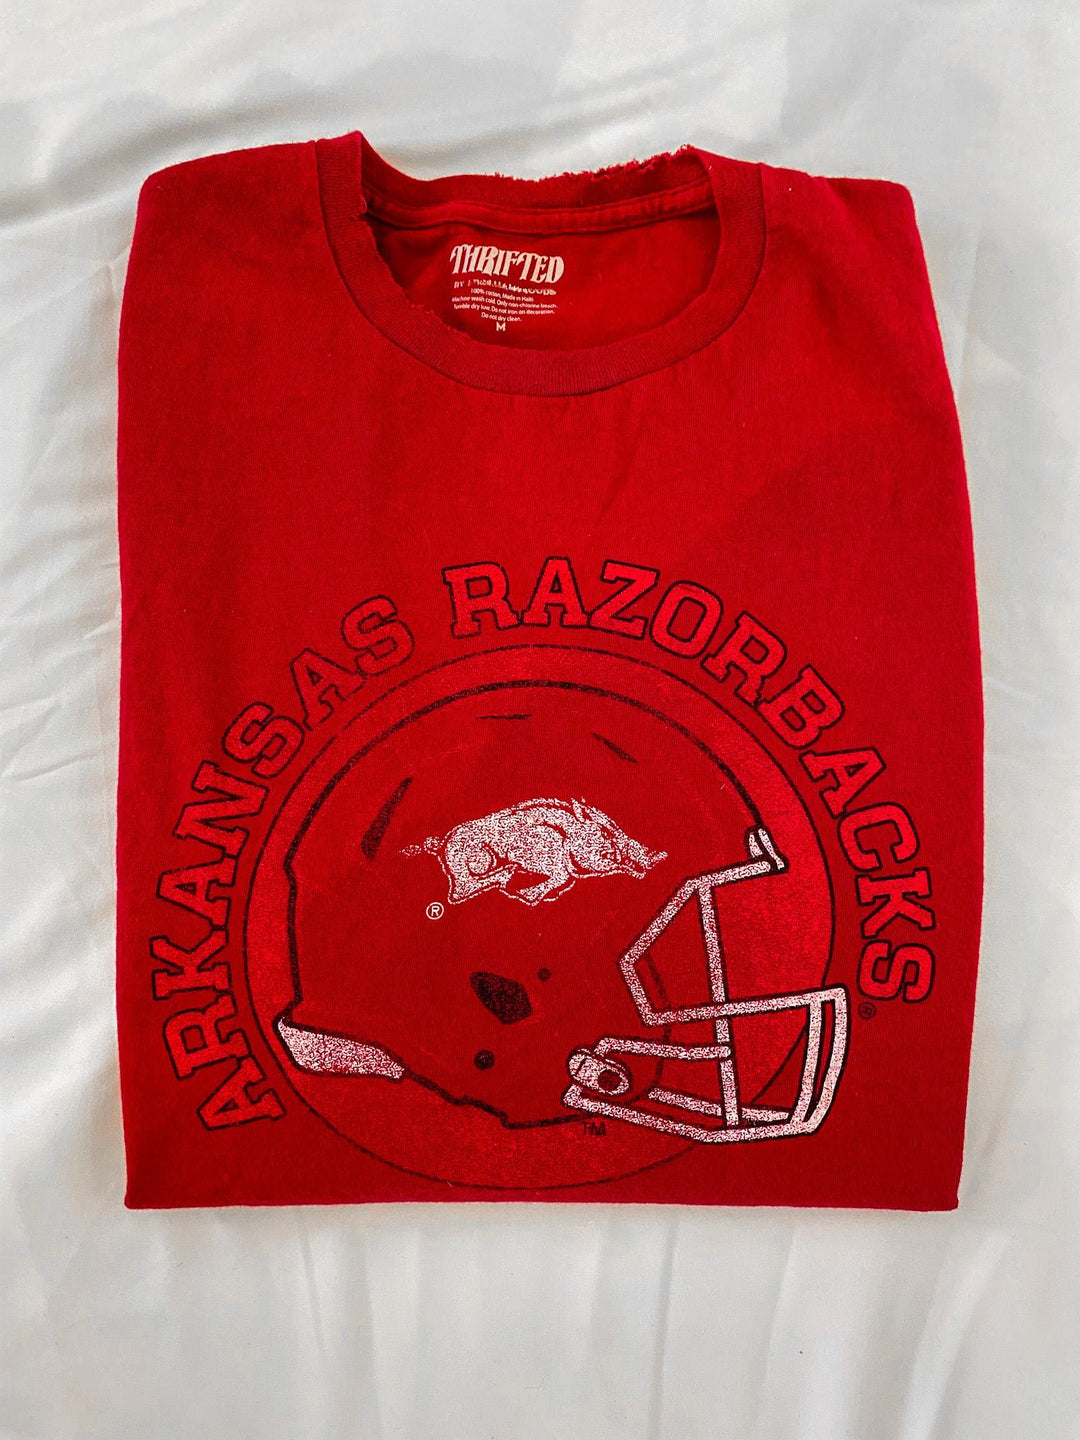 Arkansas Razorbacks Football Red Thrifted Tee - Shirts & Tops